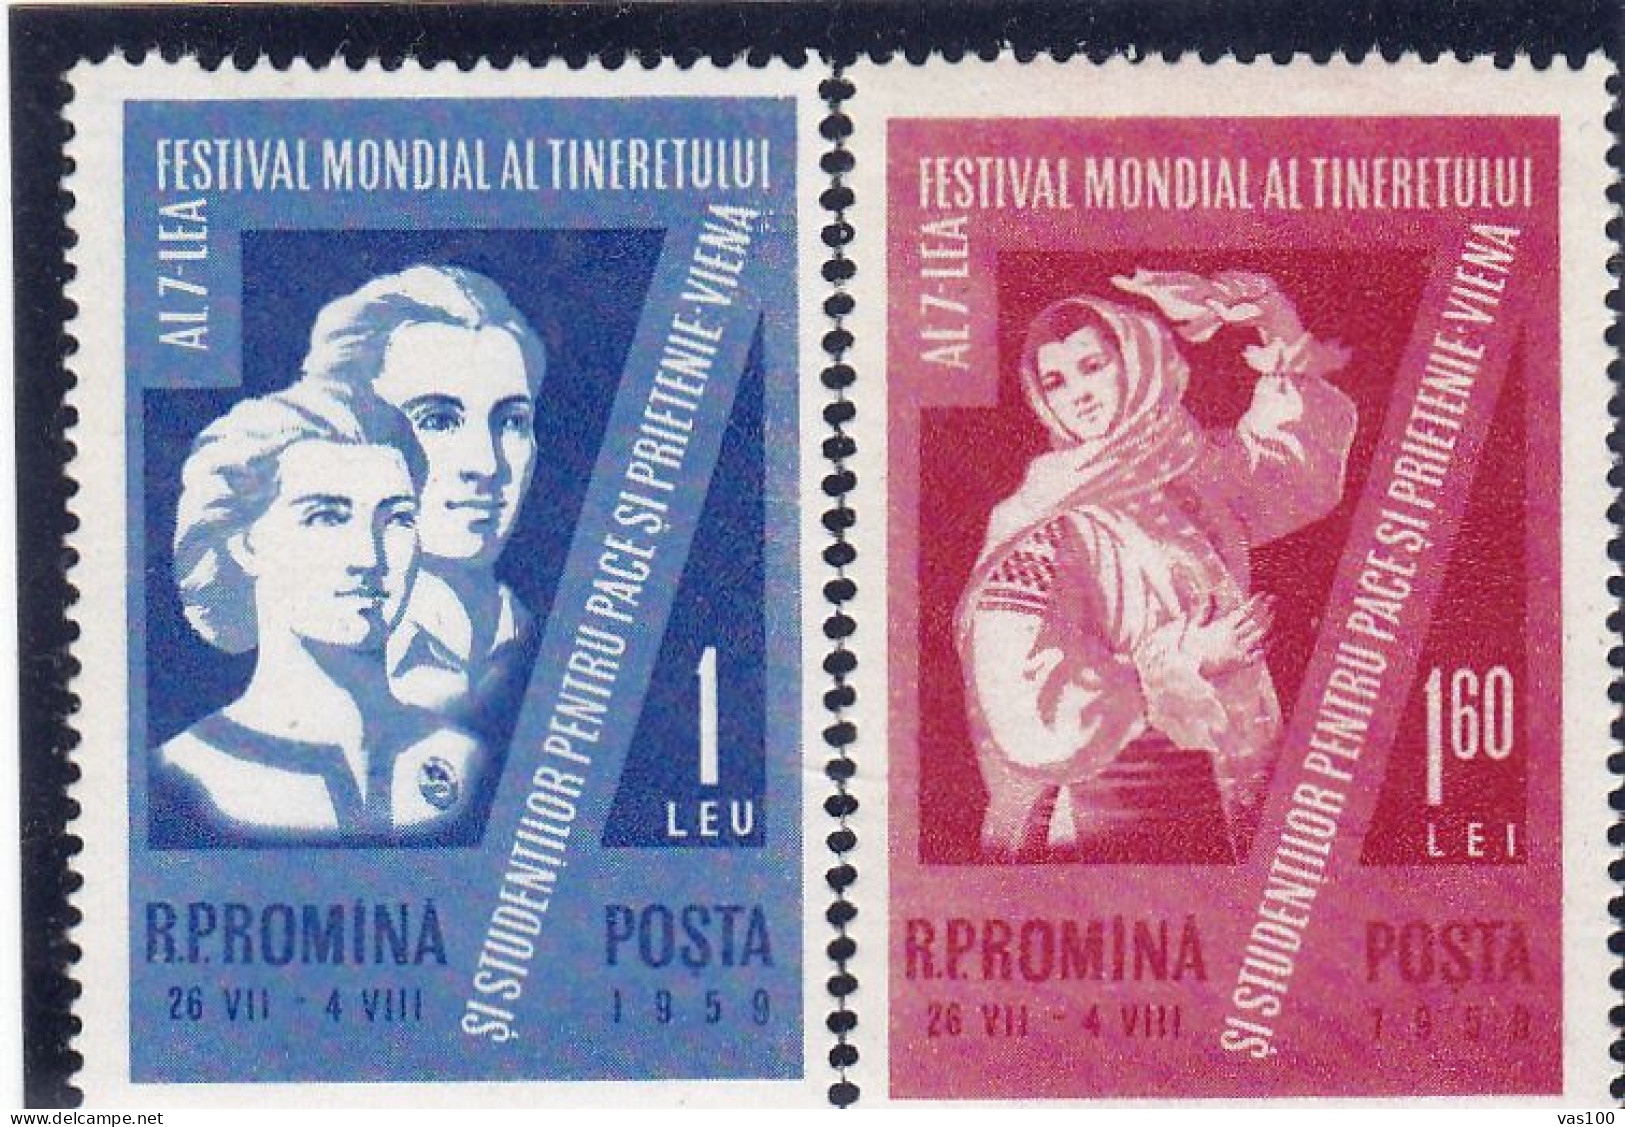 YOUTH,7TH YOUTH FESTIVAL-WIEN,1959,MI.1790/91, MNH**, ROMANIA. - Nuevos